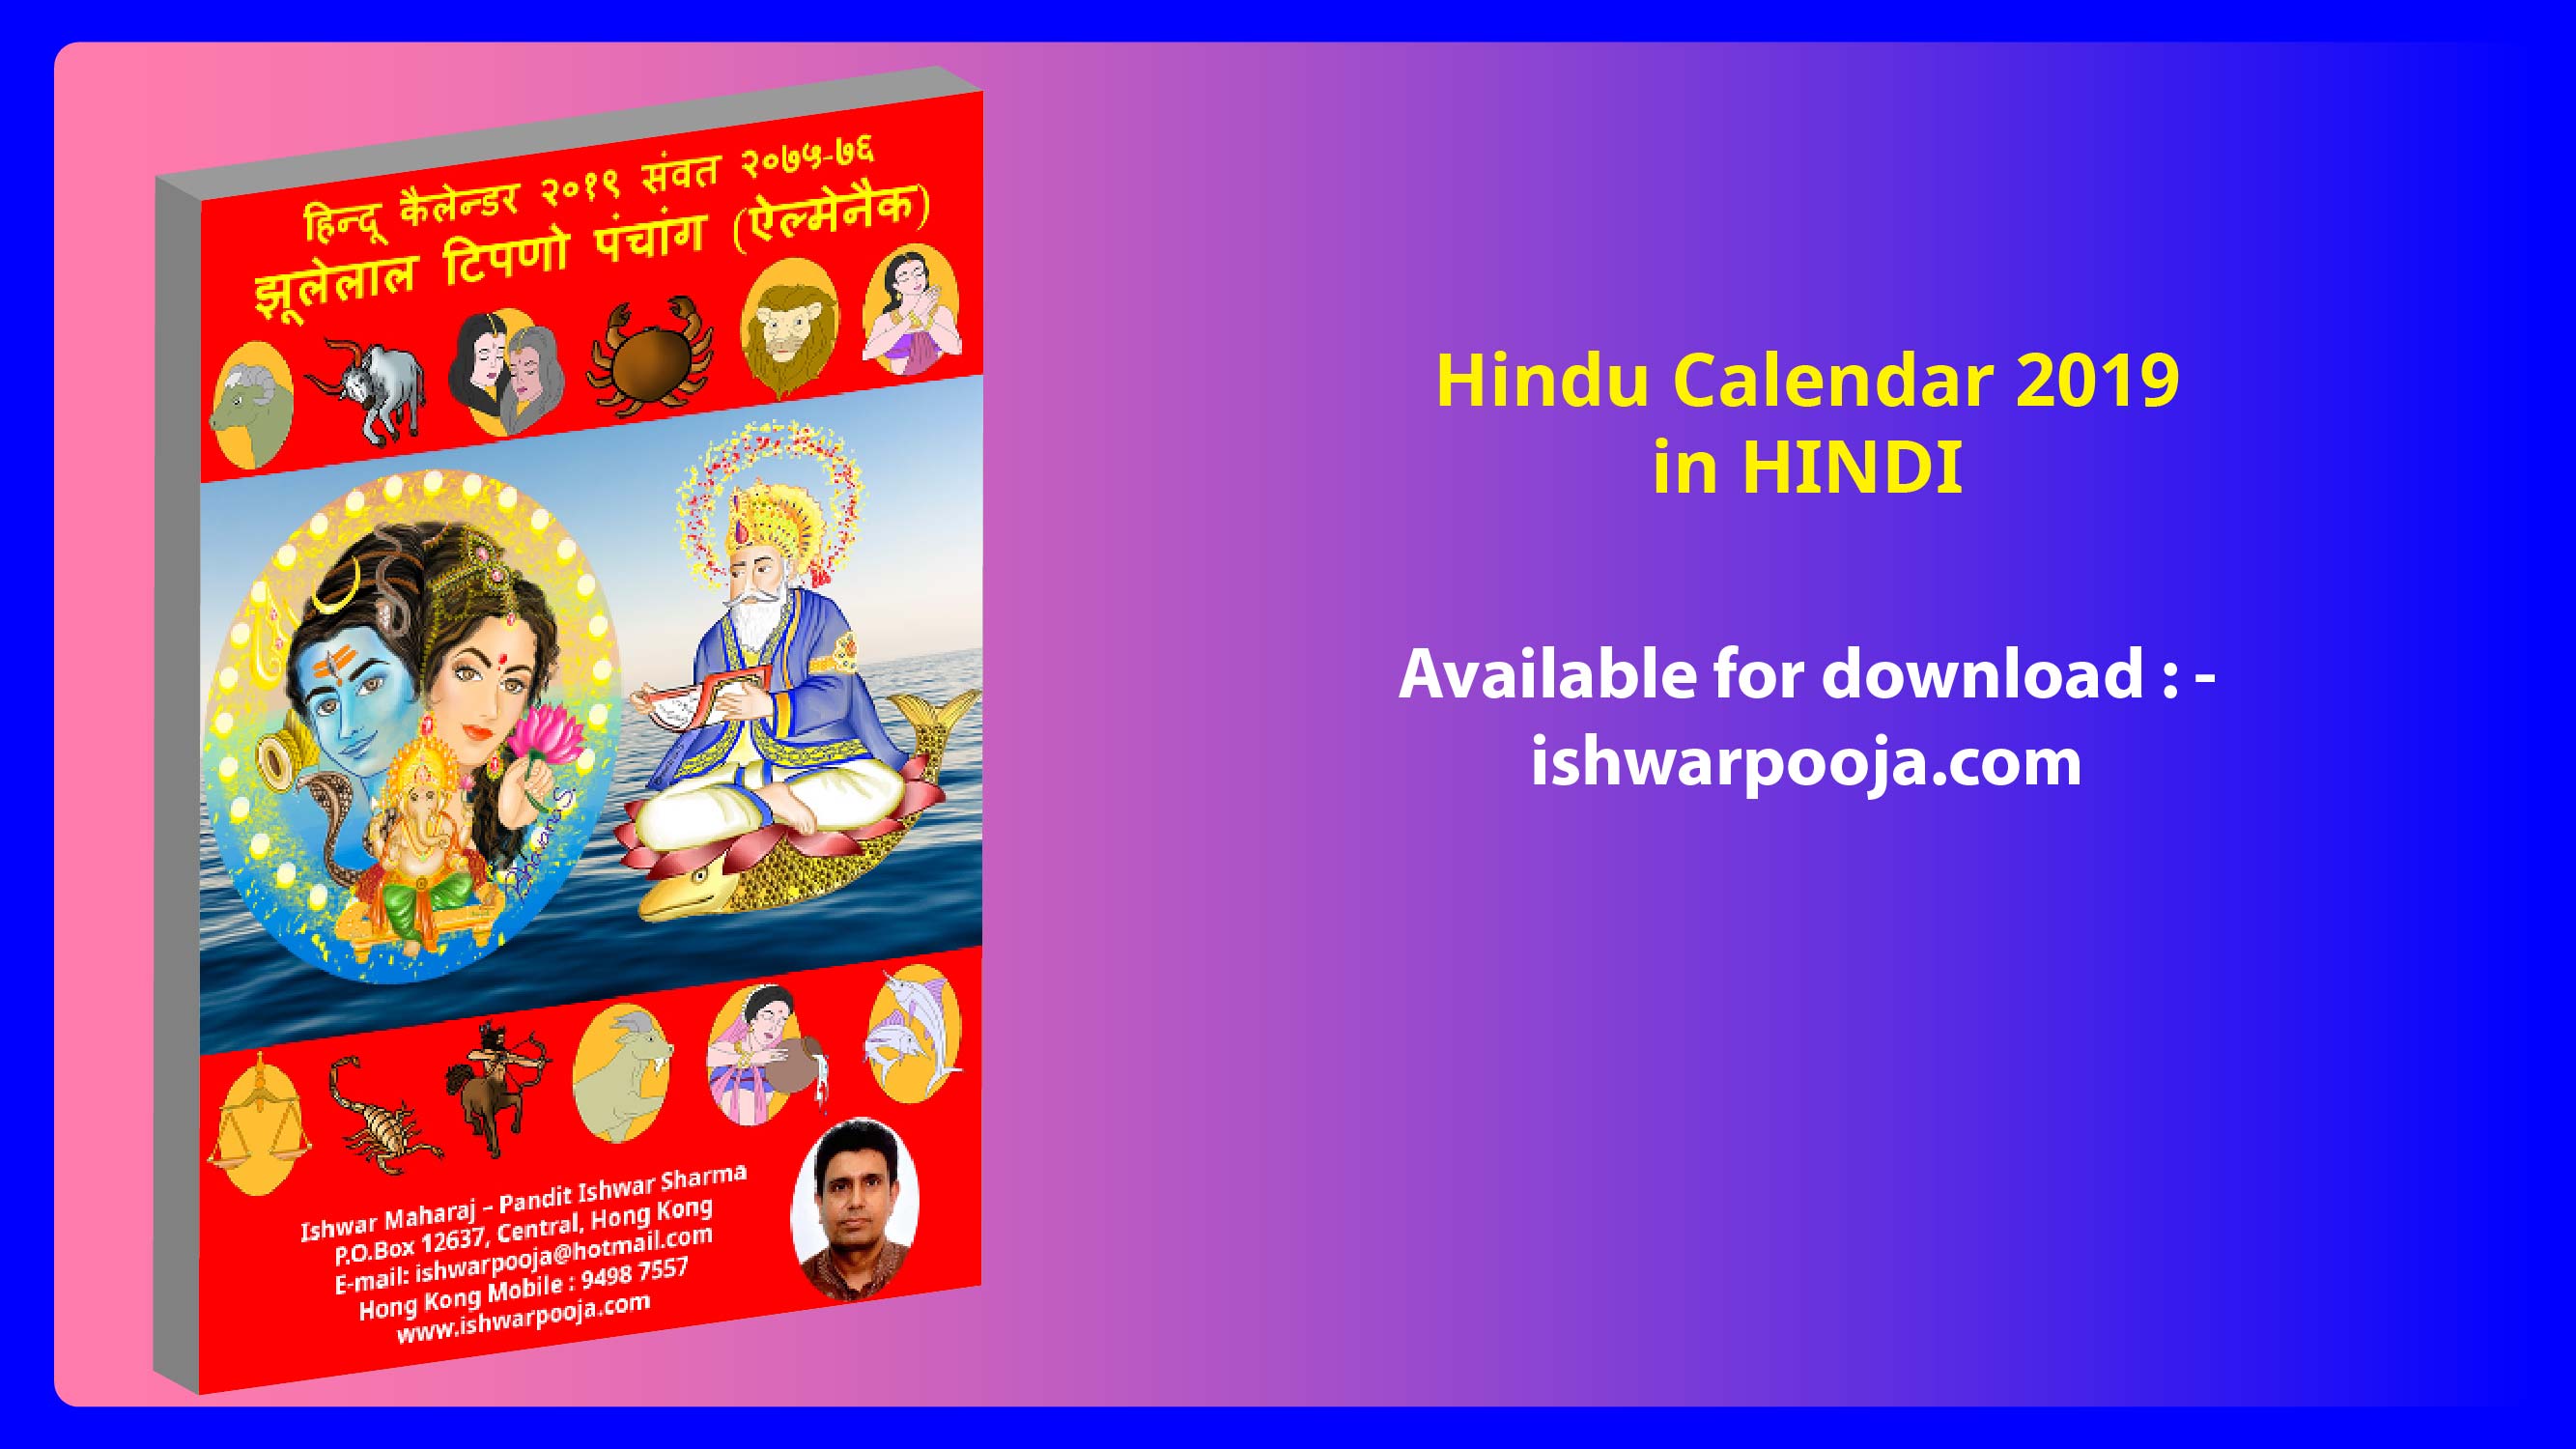 Hindu Calendar 2019 in Hindi